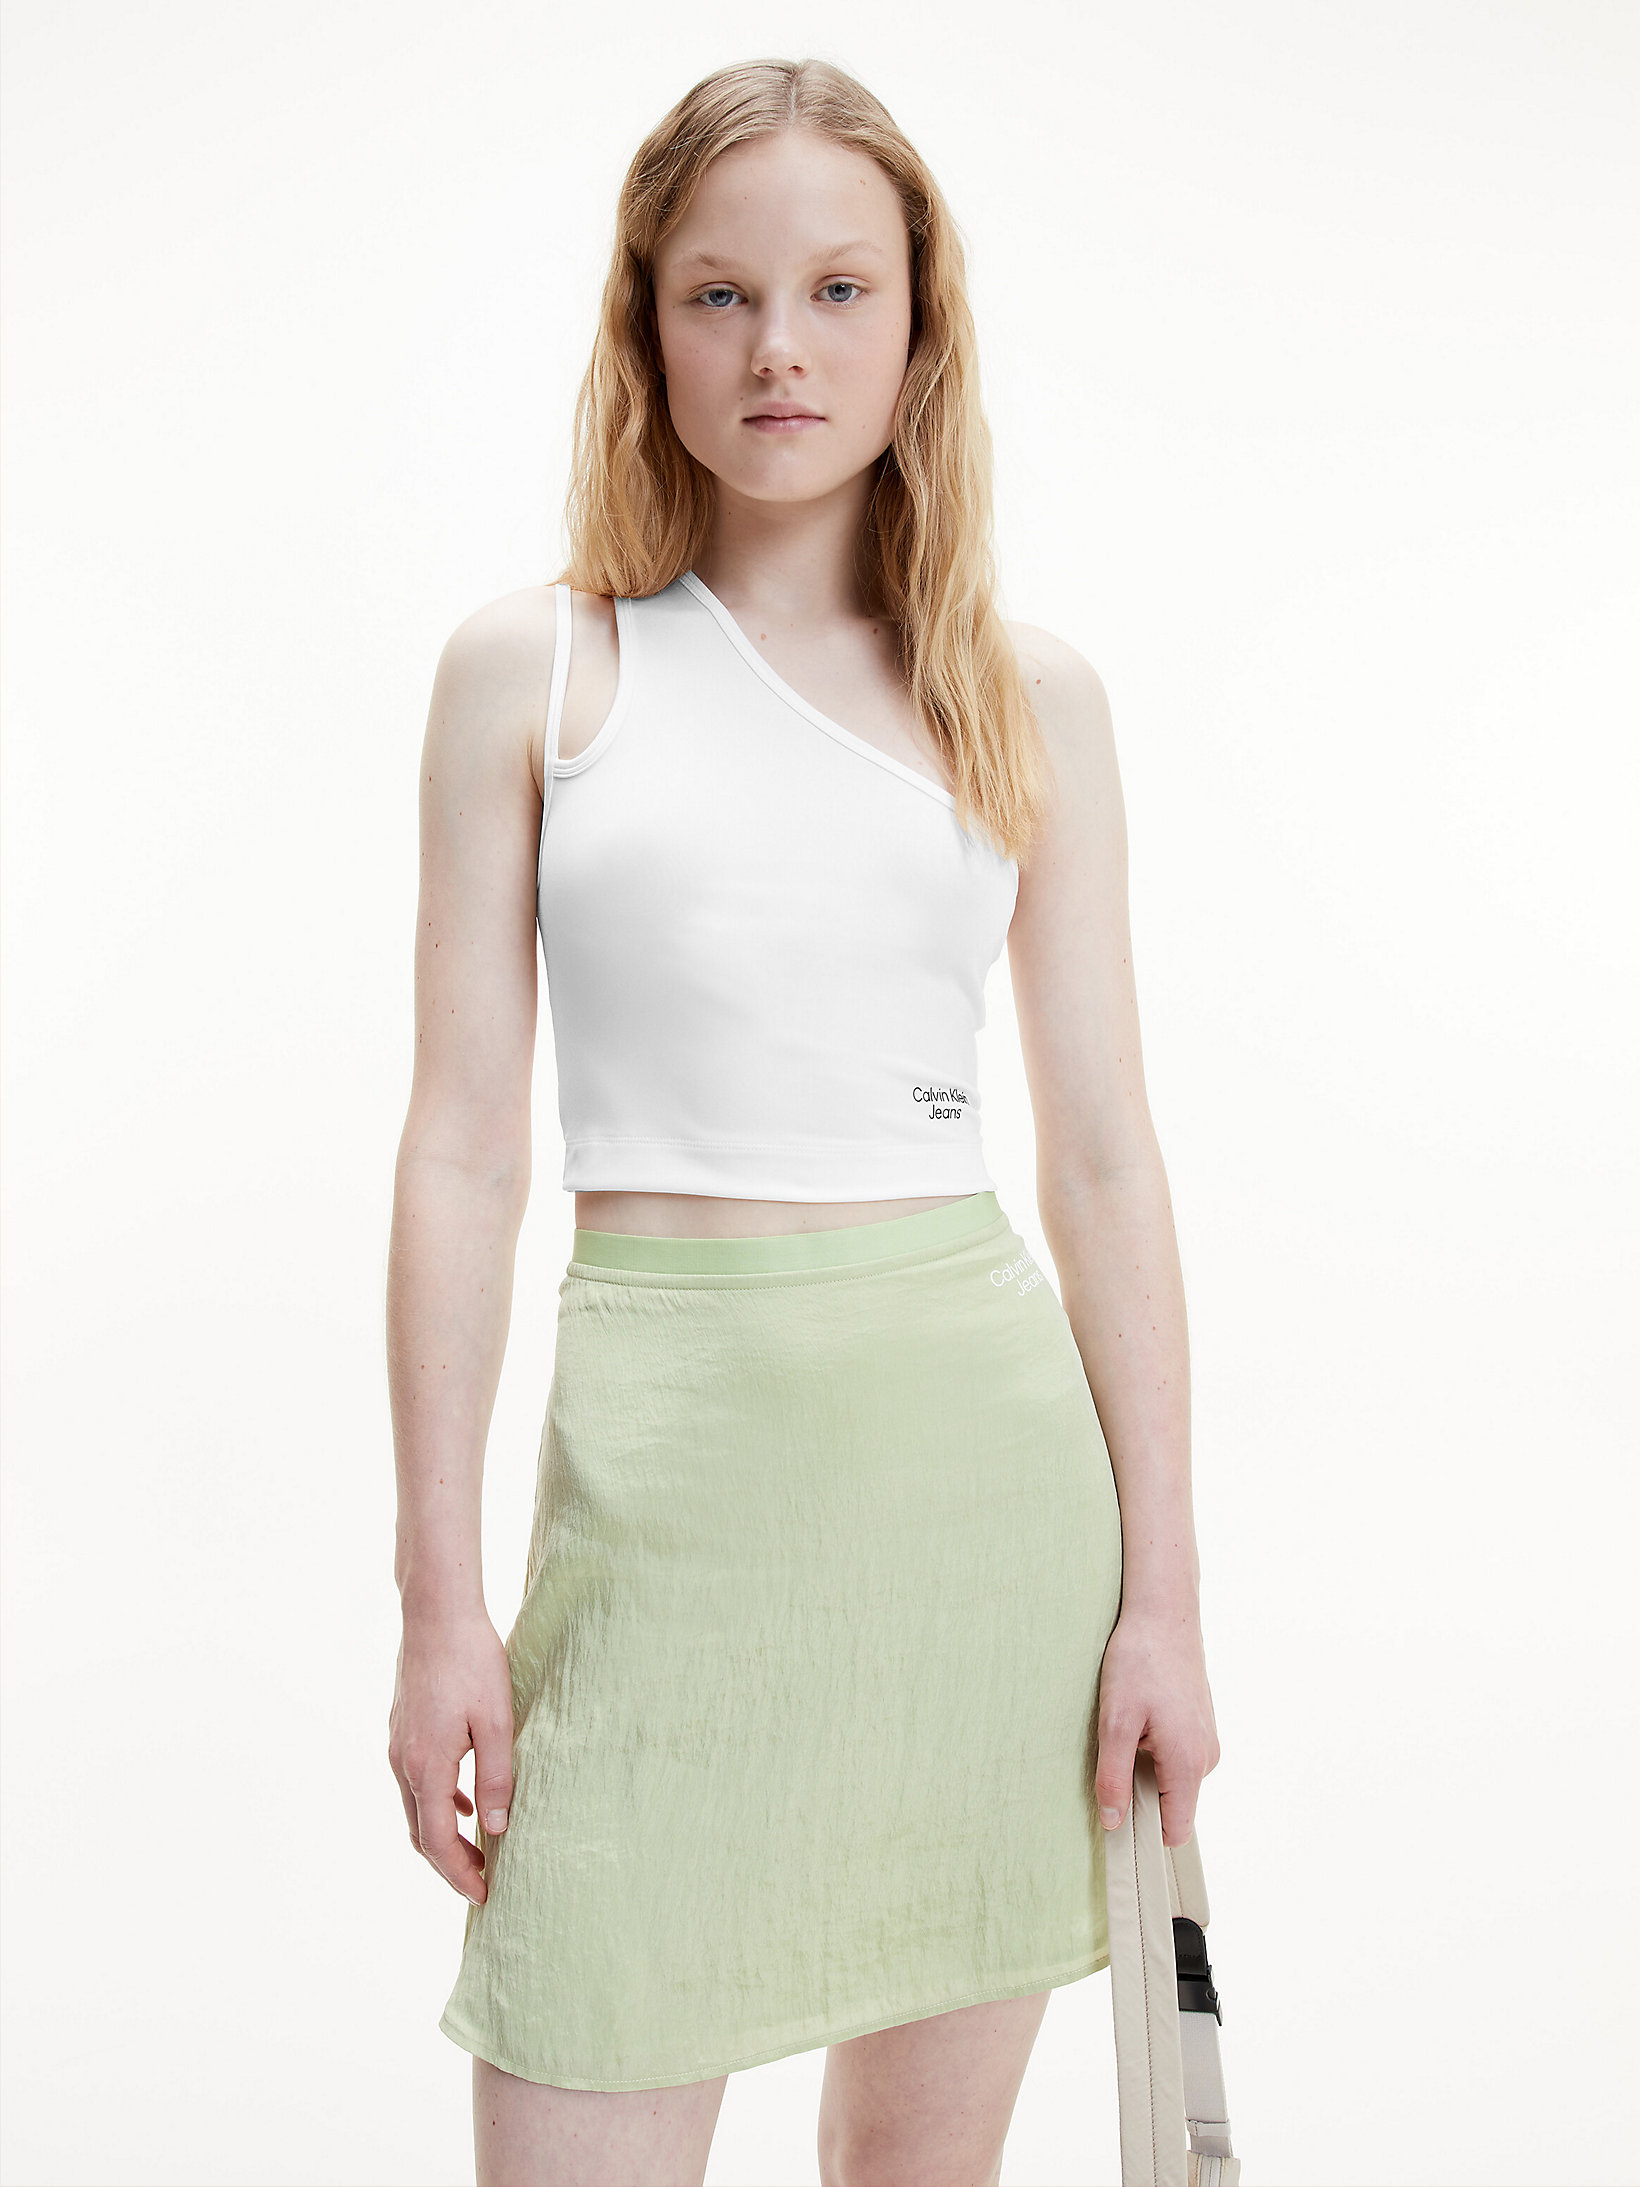 Bright White Shiny Spandex One-Shoulder Top undefined women Calvin Klein